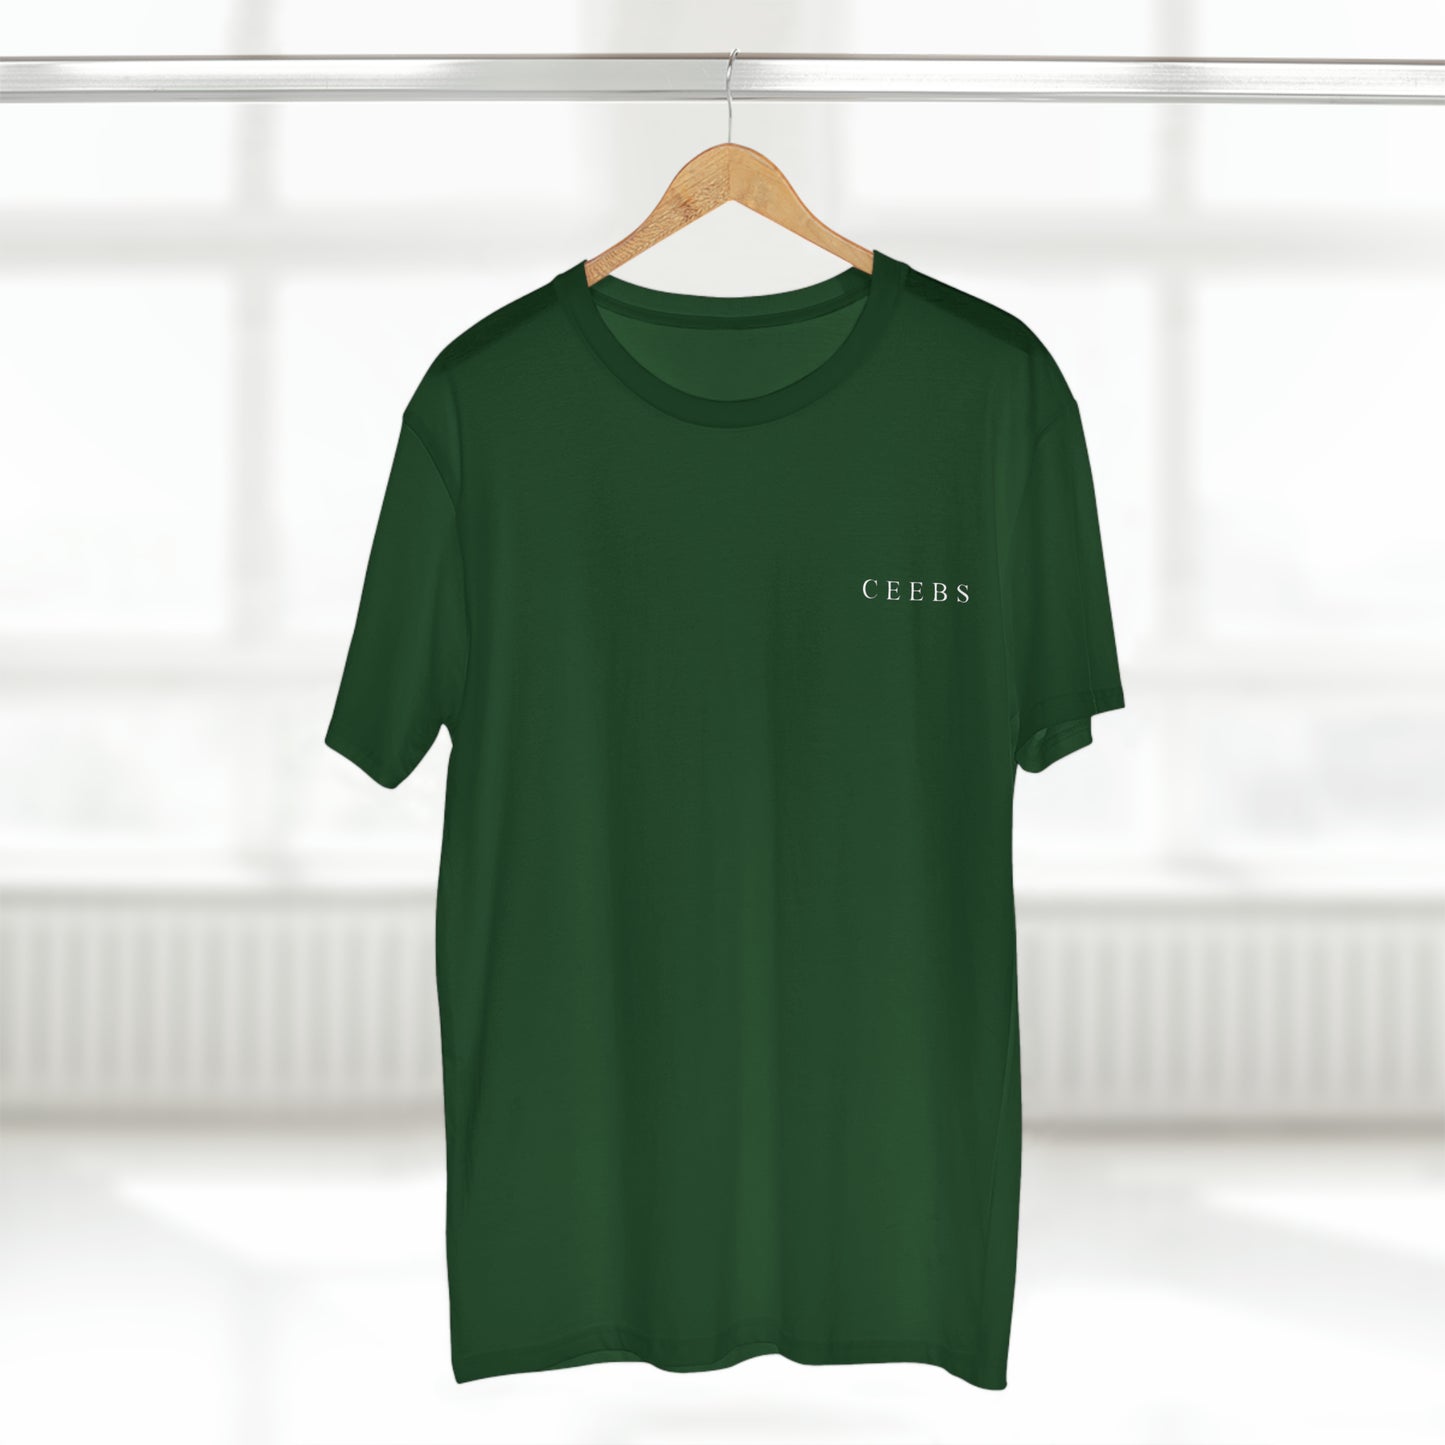 'Ceebs' Shirt